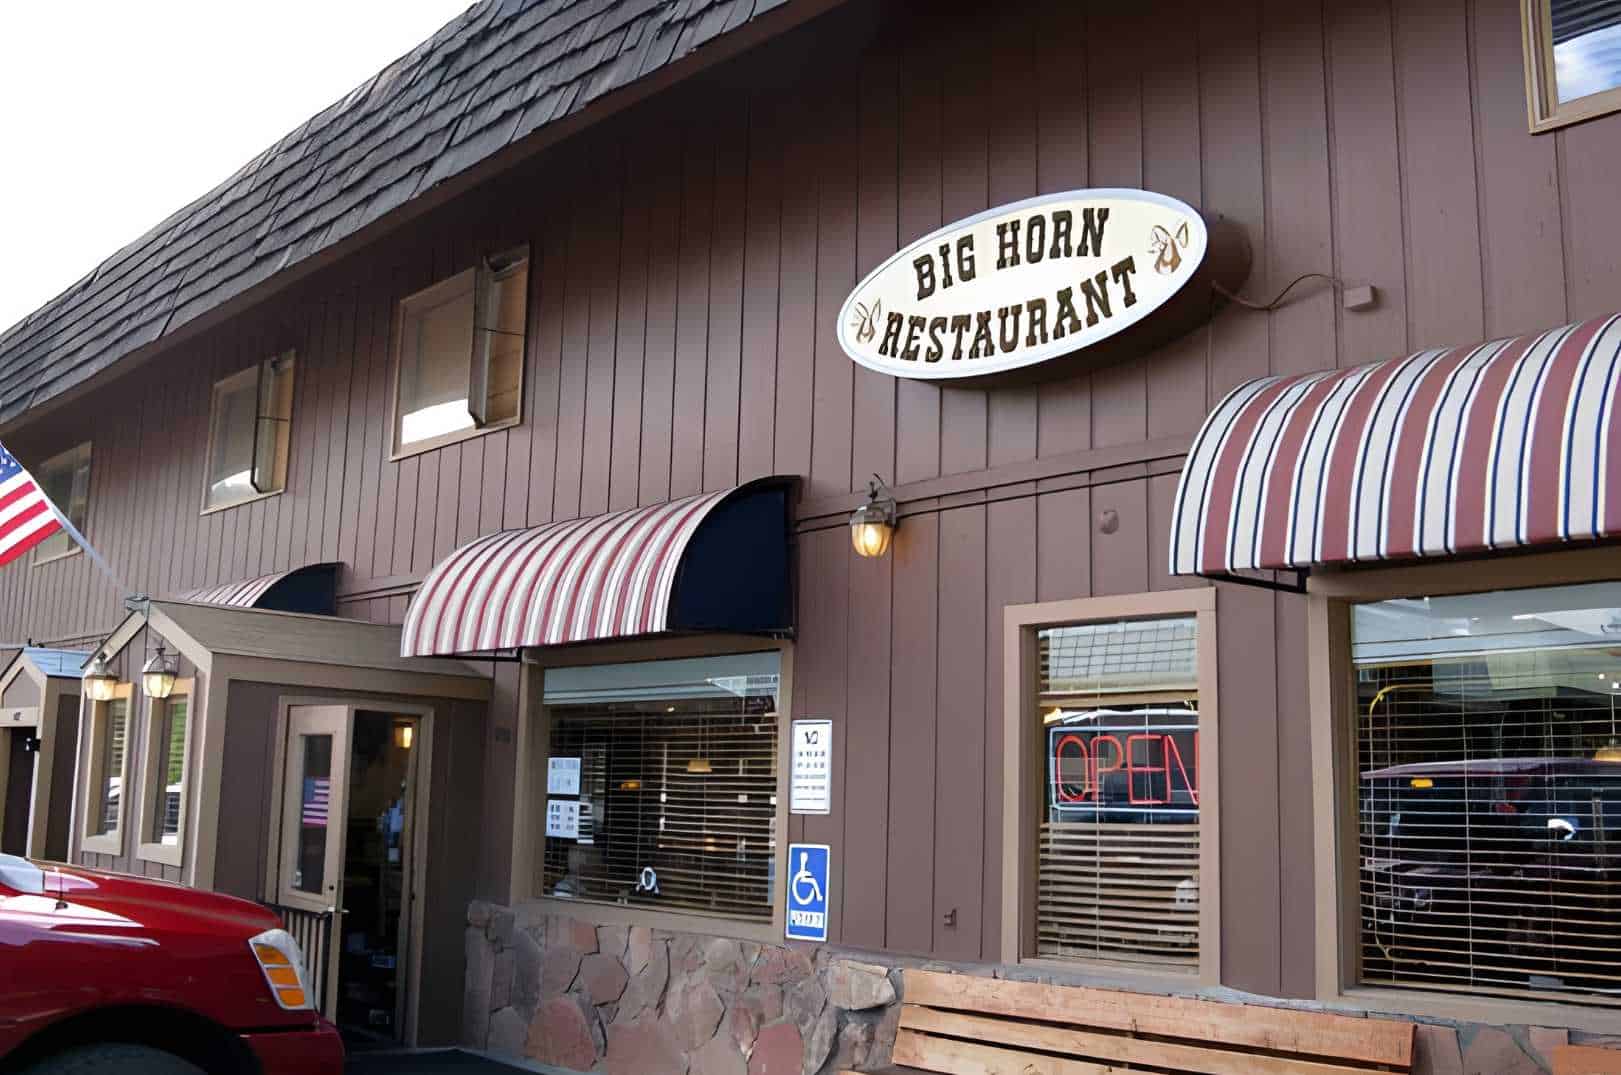 Big Horn Restaurant Best Restaurants in Estes Park, CO